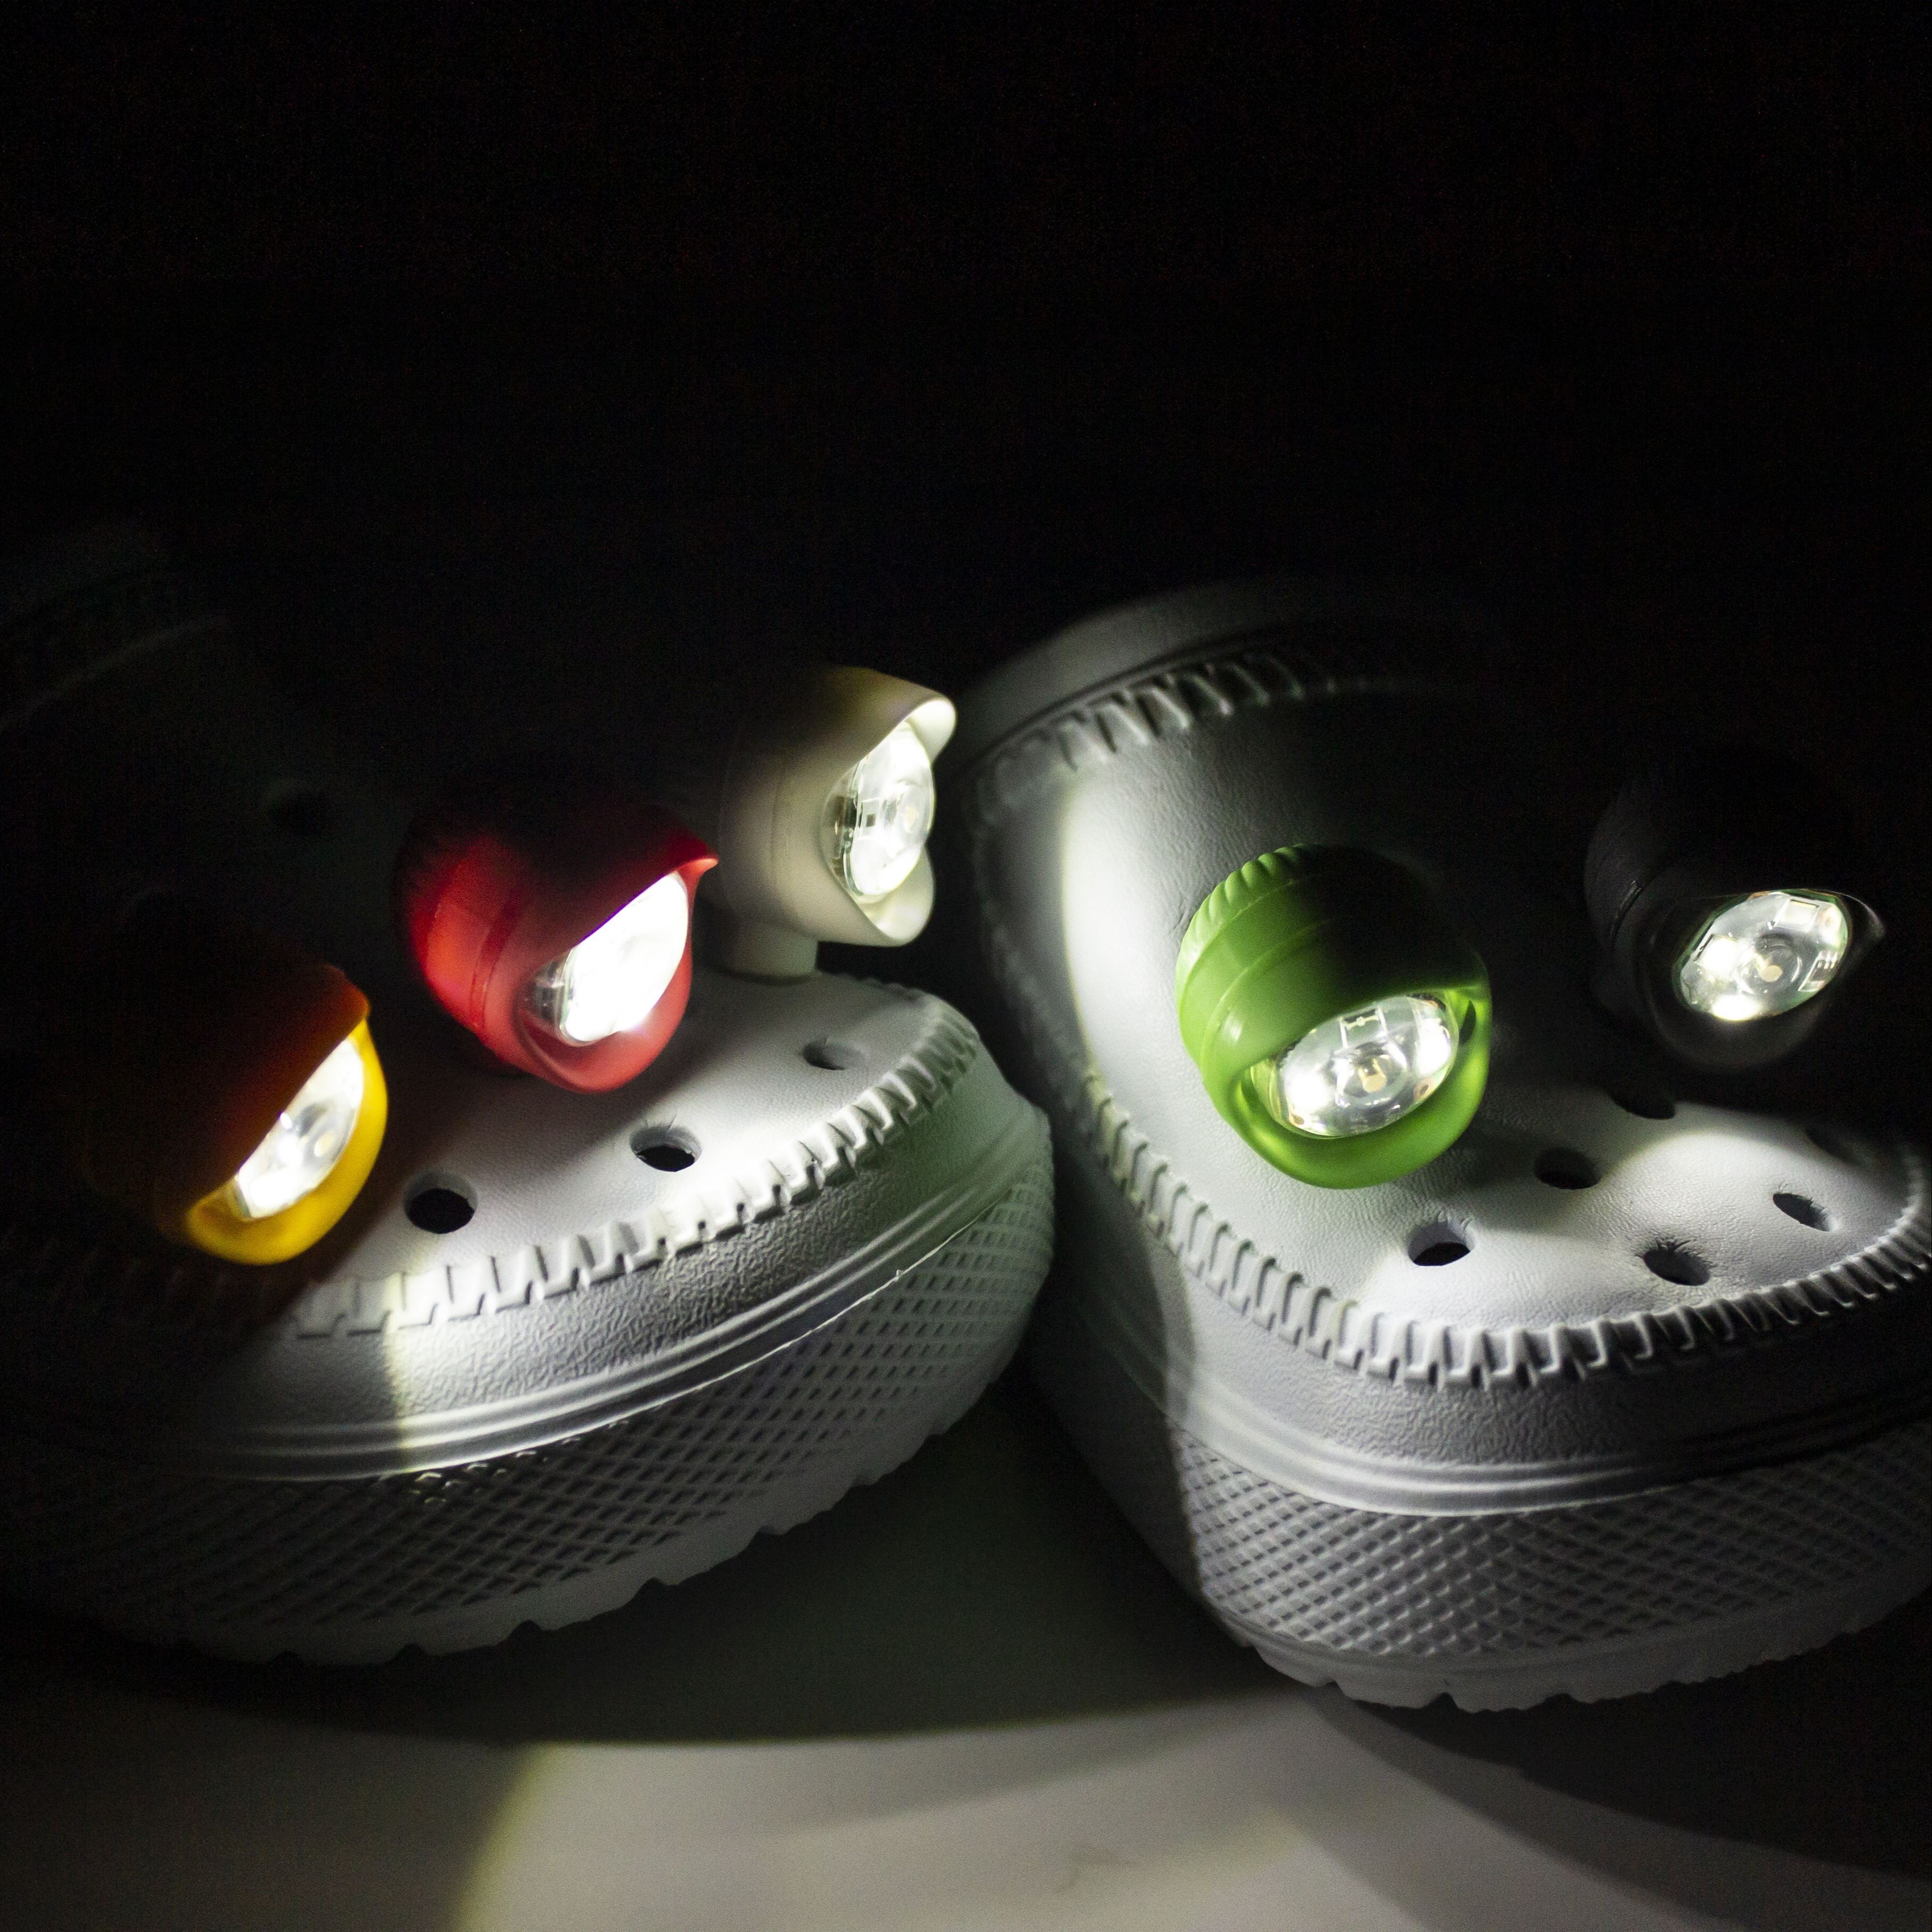 Shrek Croc lights(2 pack) - Rechargeable